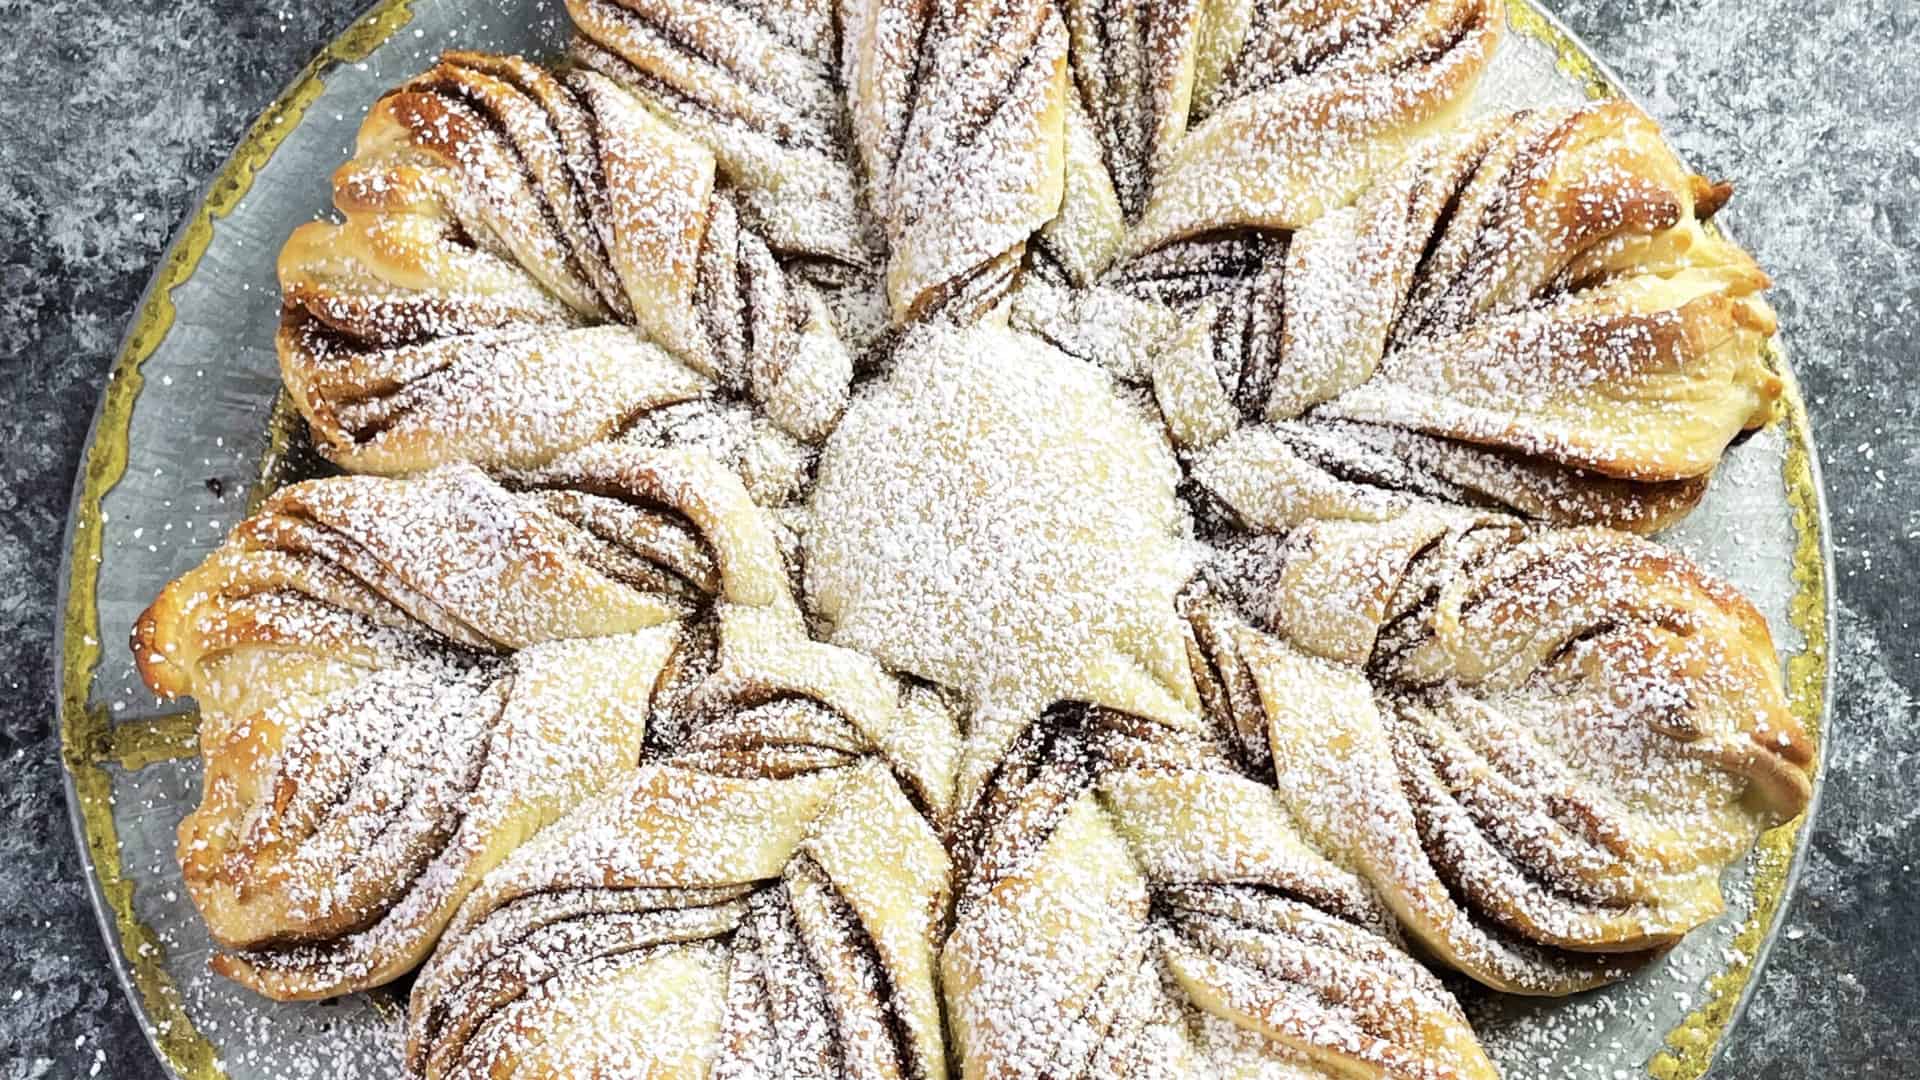 Cinnamon Star bread on a platter dusted in powdered sugar.